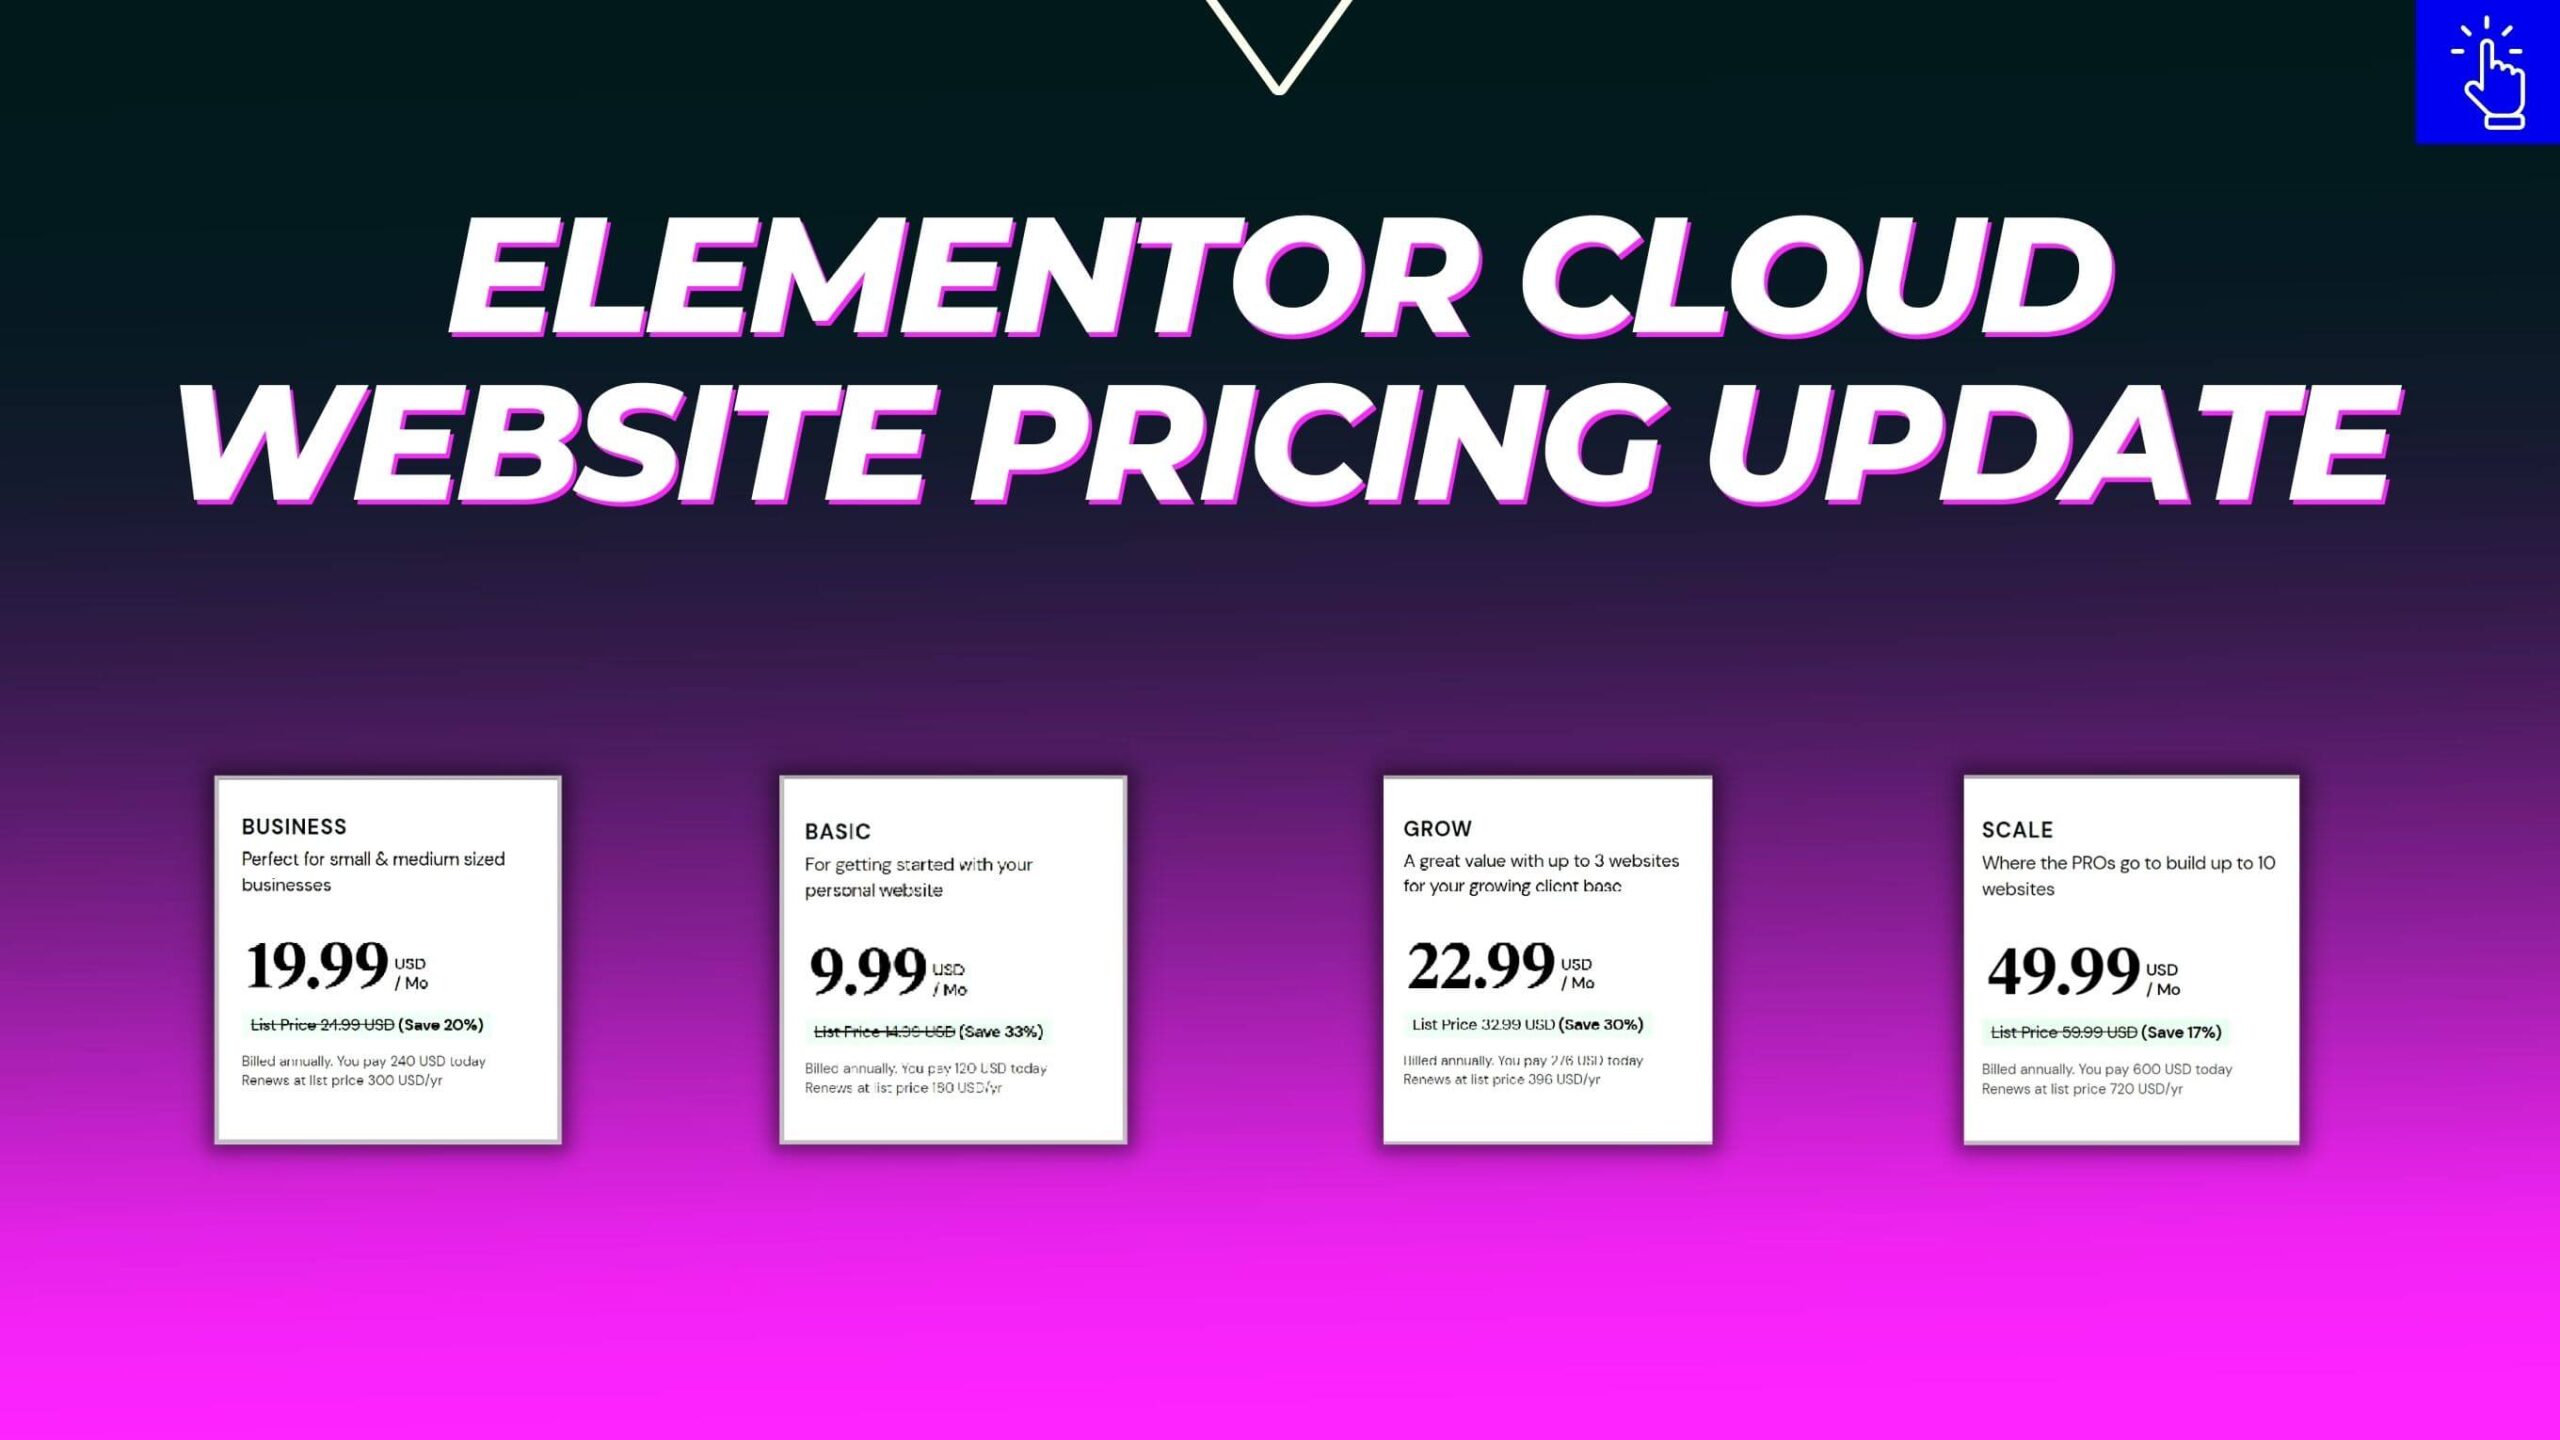 Elementor Cloud Website Pricing Update- New Plans